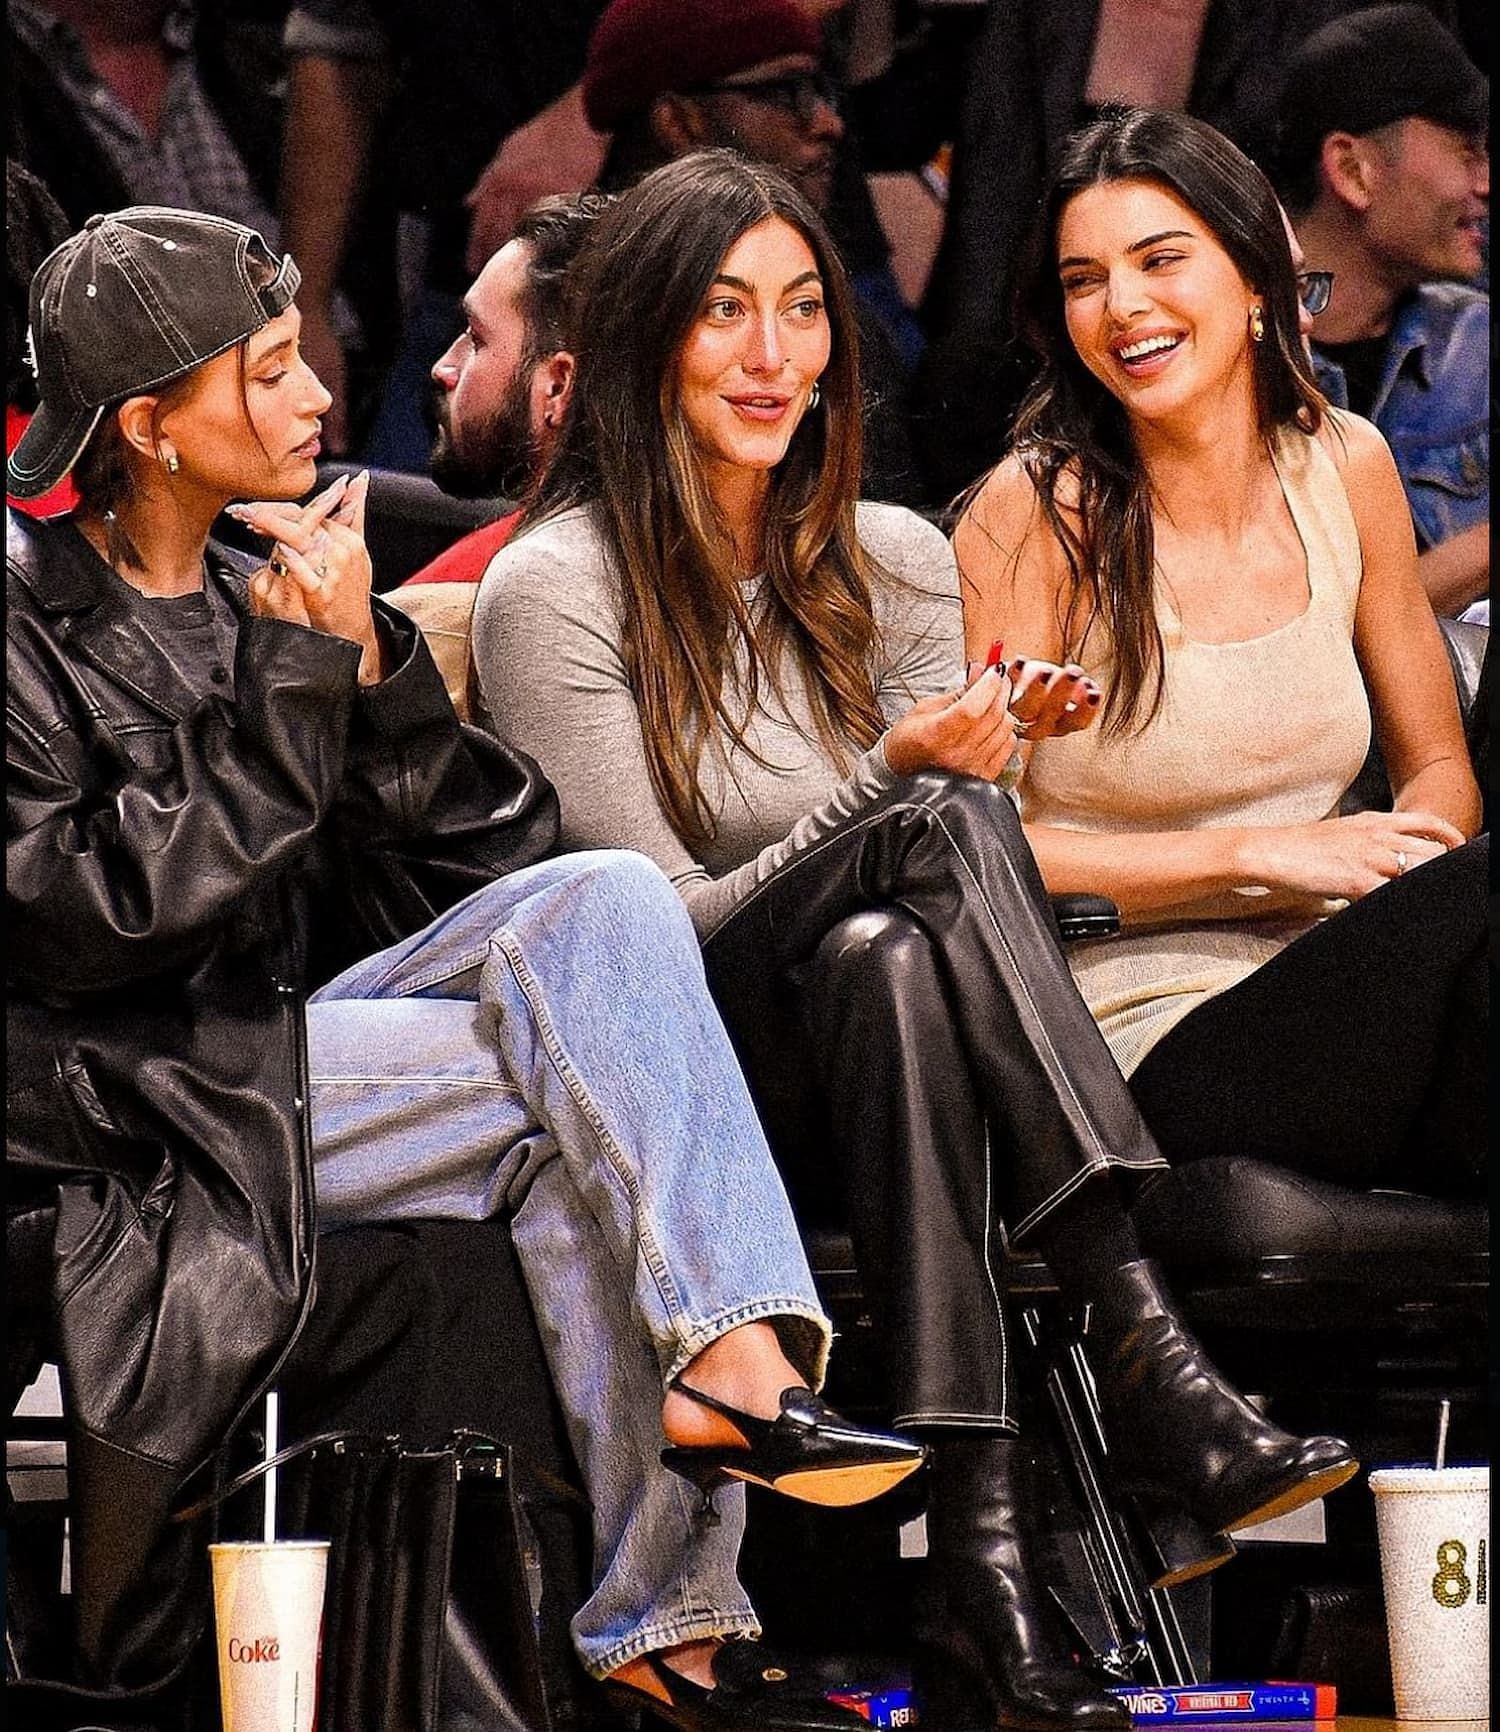 Kendall Jenner, Hailey Bieber, and Sarah Staudinger sitting together